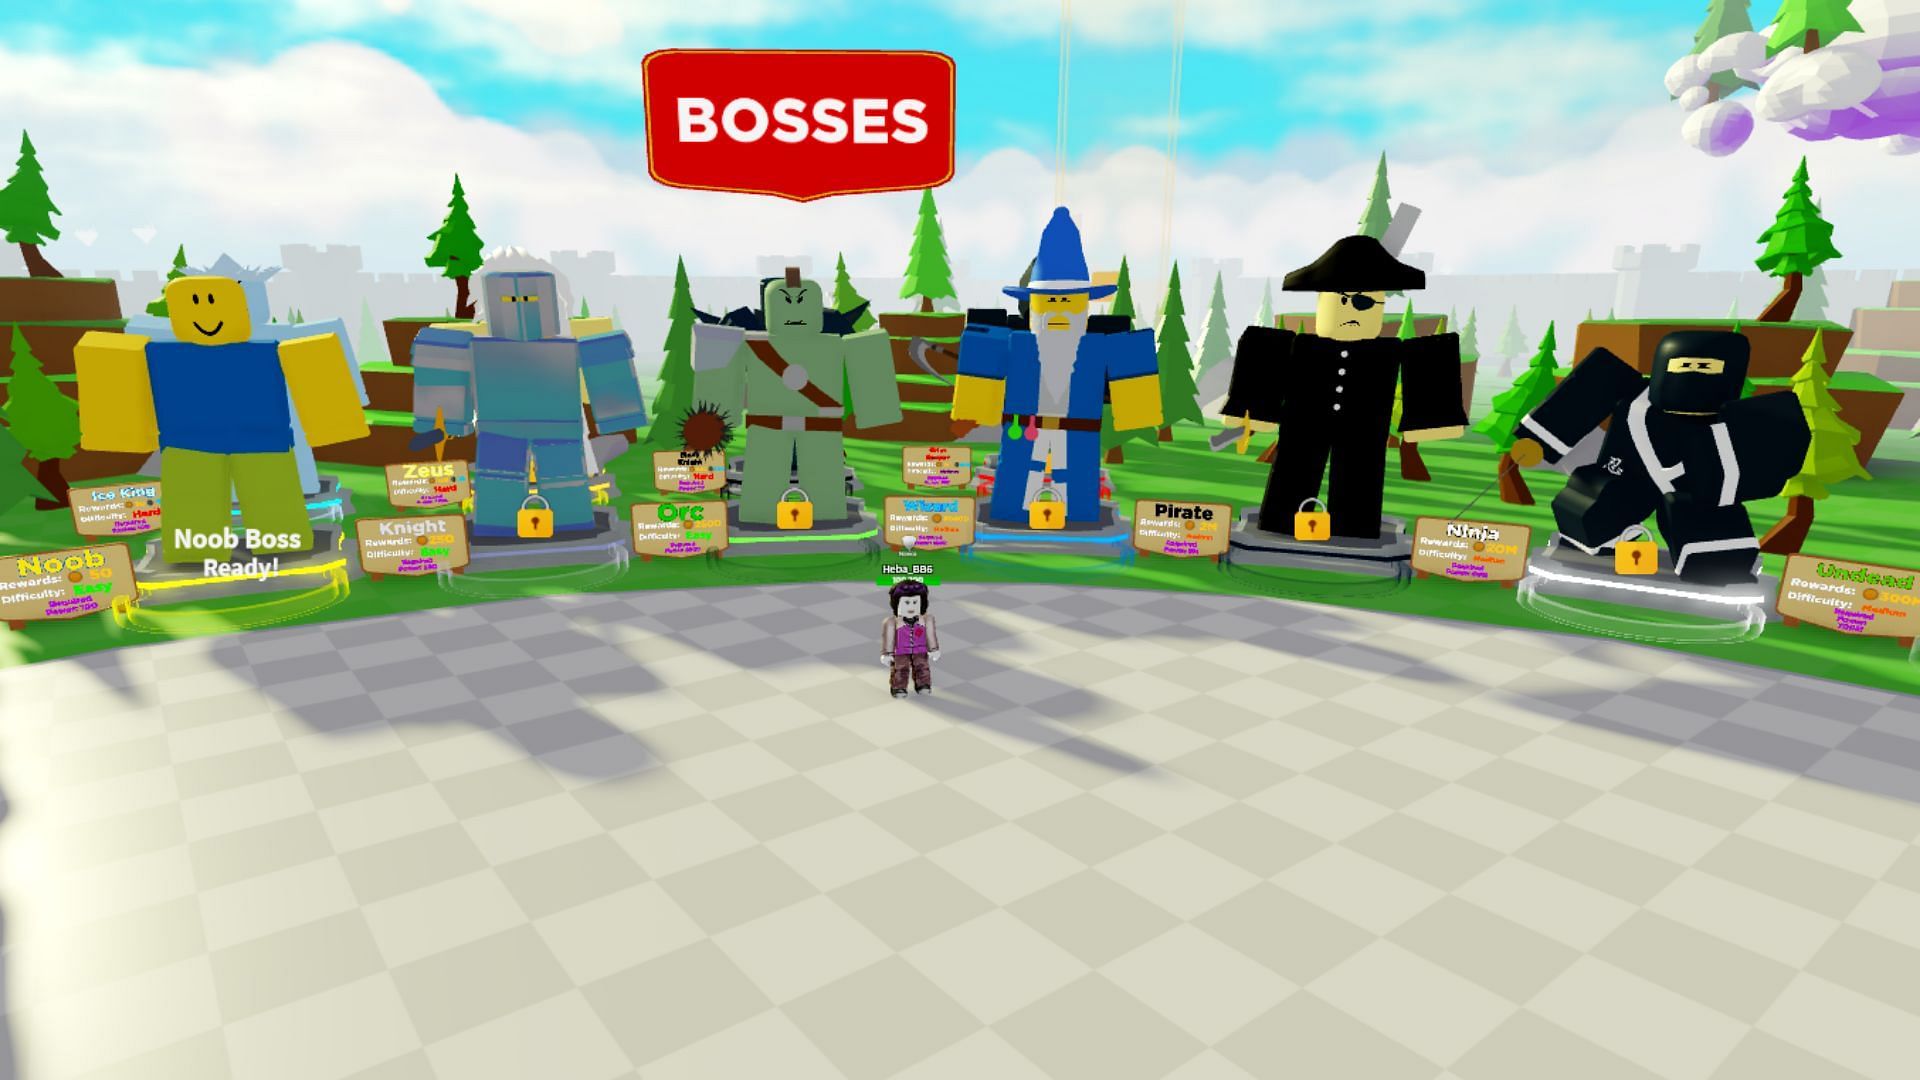 Giant bosses in Boss Fighting Simulator (Image viaa Roblox)